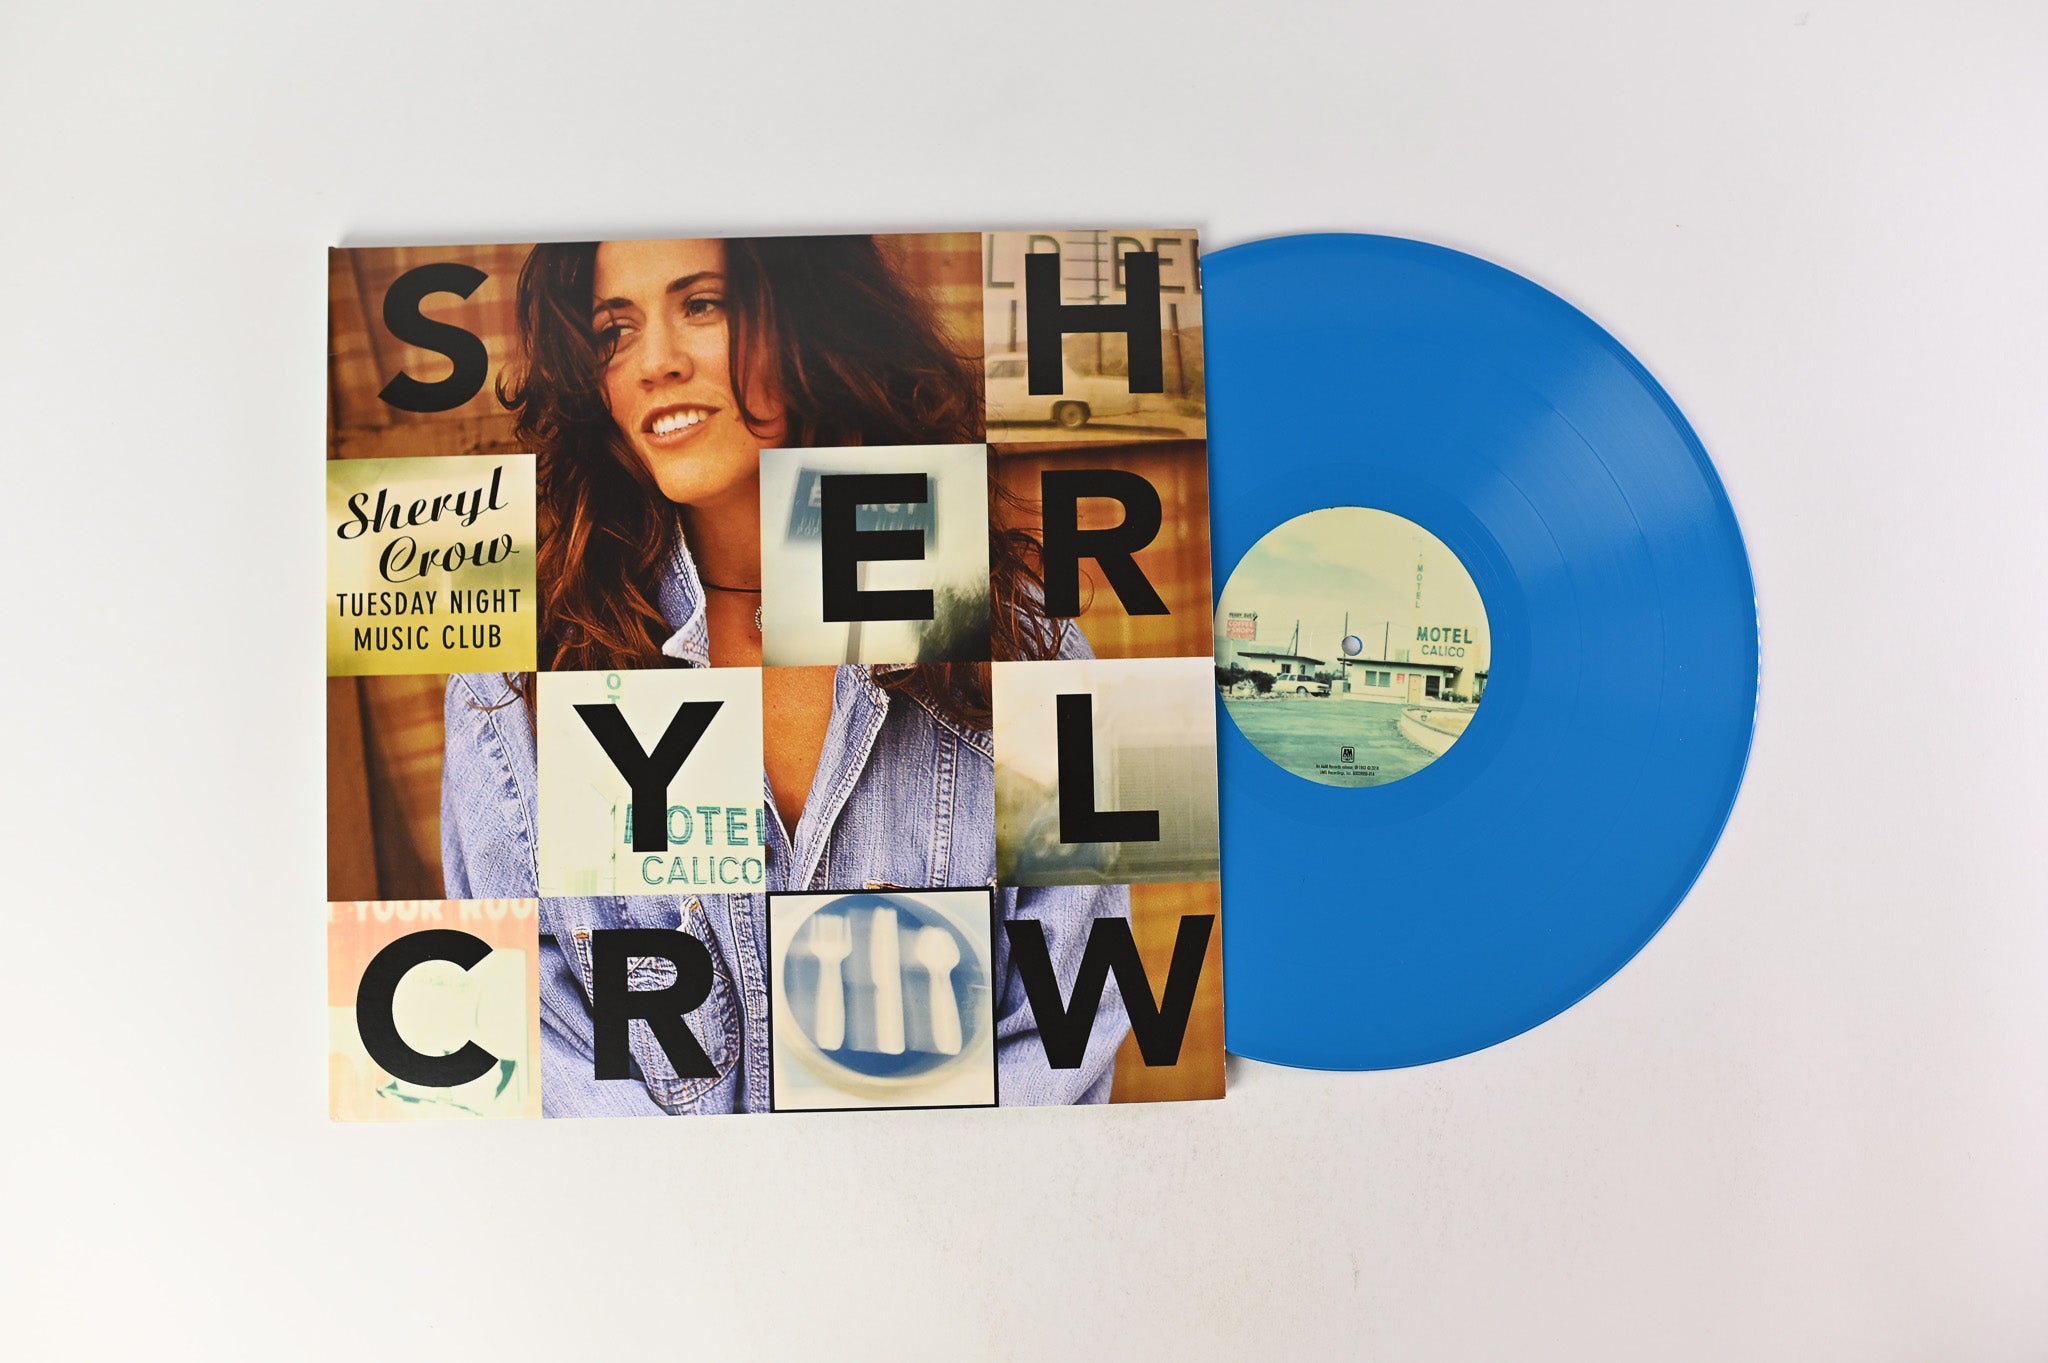 Sheryl Crow - Tuesday Night Music Club on A&M Records / UMe - Blue Vinyl